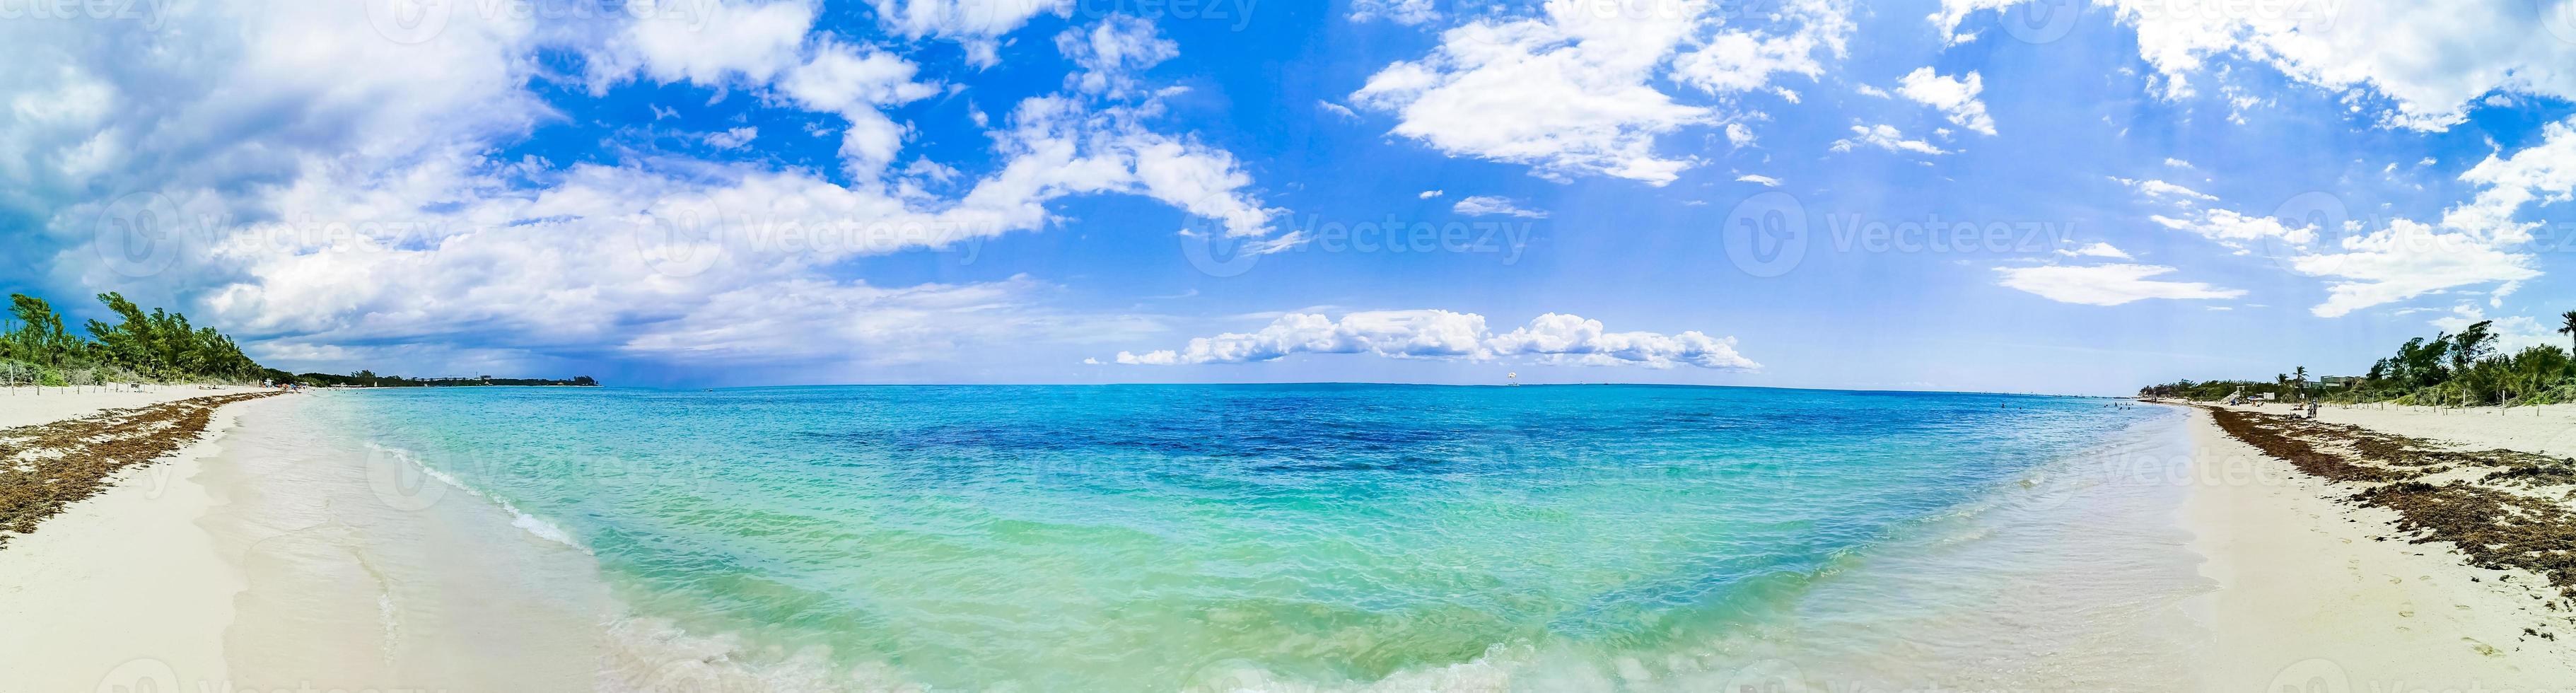 tropisch strandpanorama in punta esmeralda, playa del carmen, mexico foto